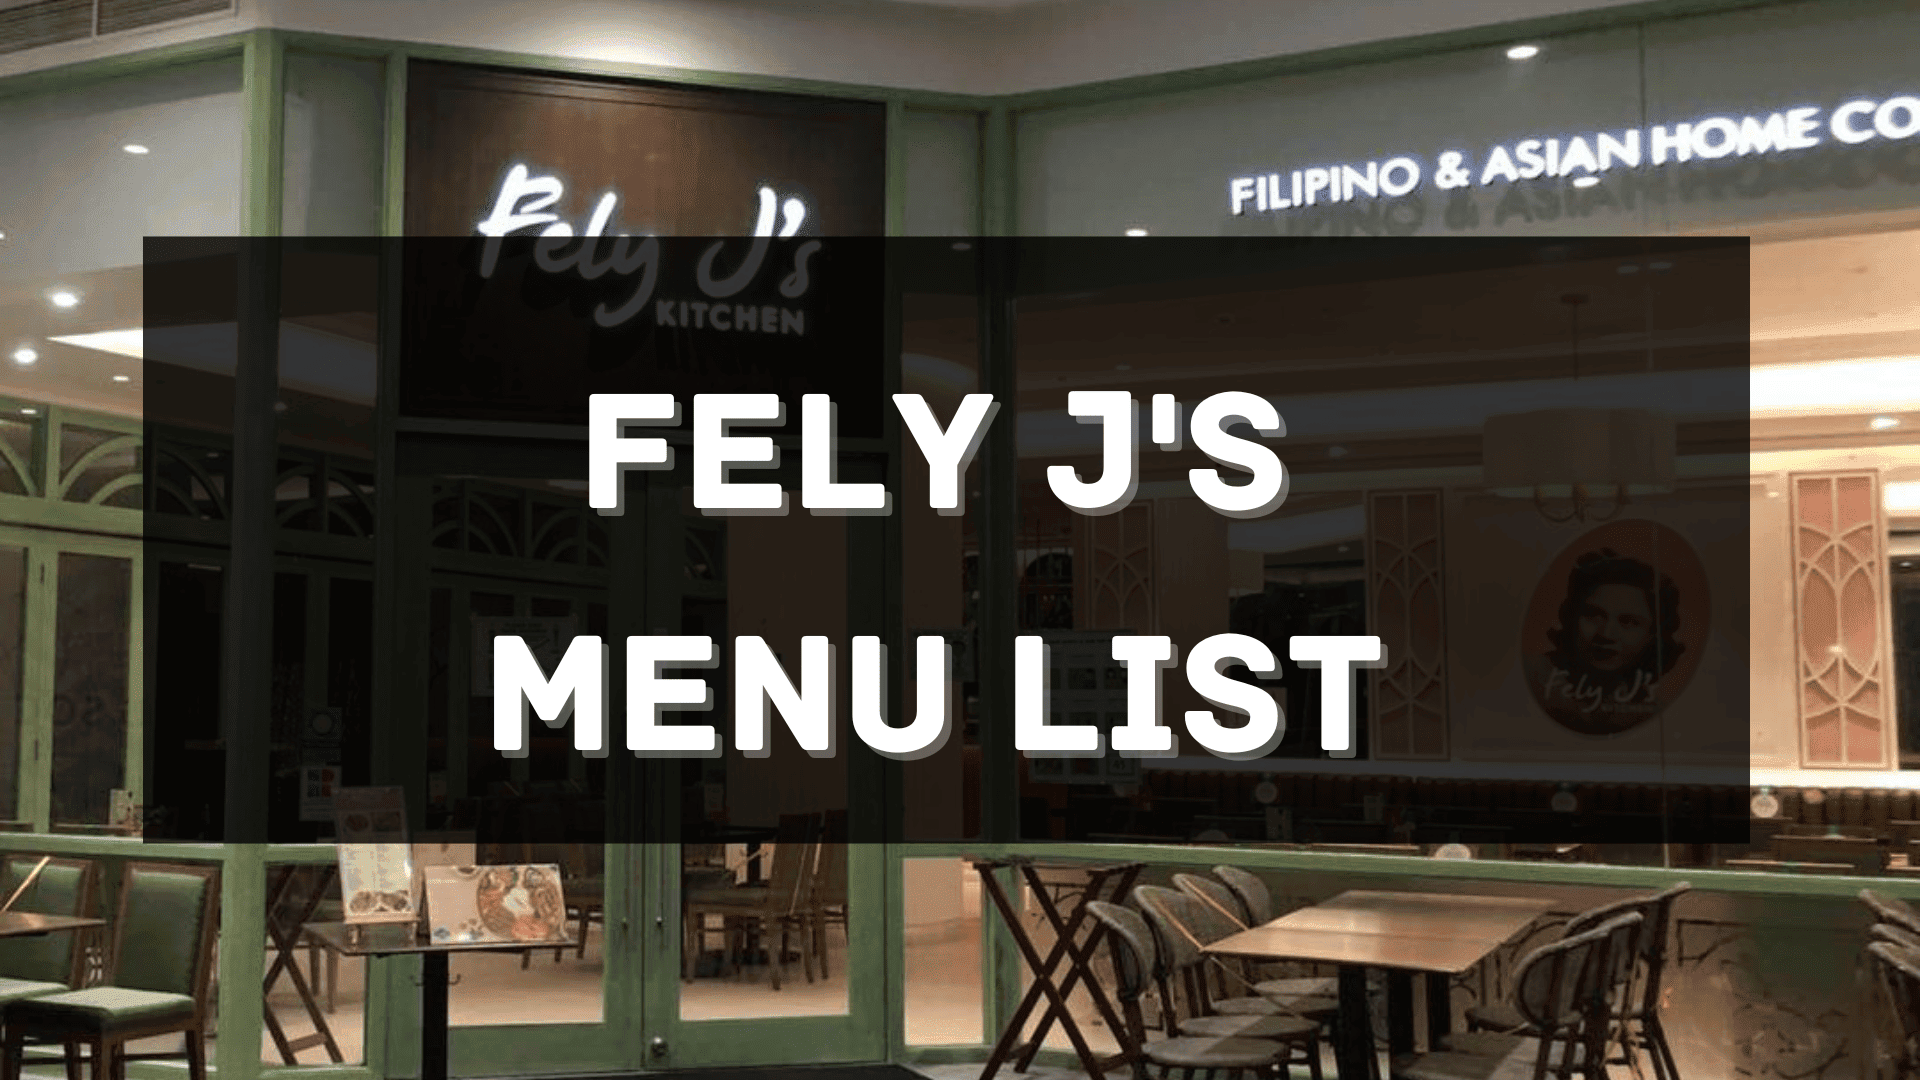 fely j's menu prices philippines